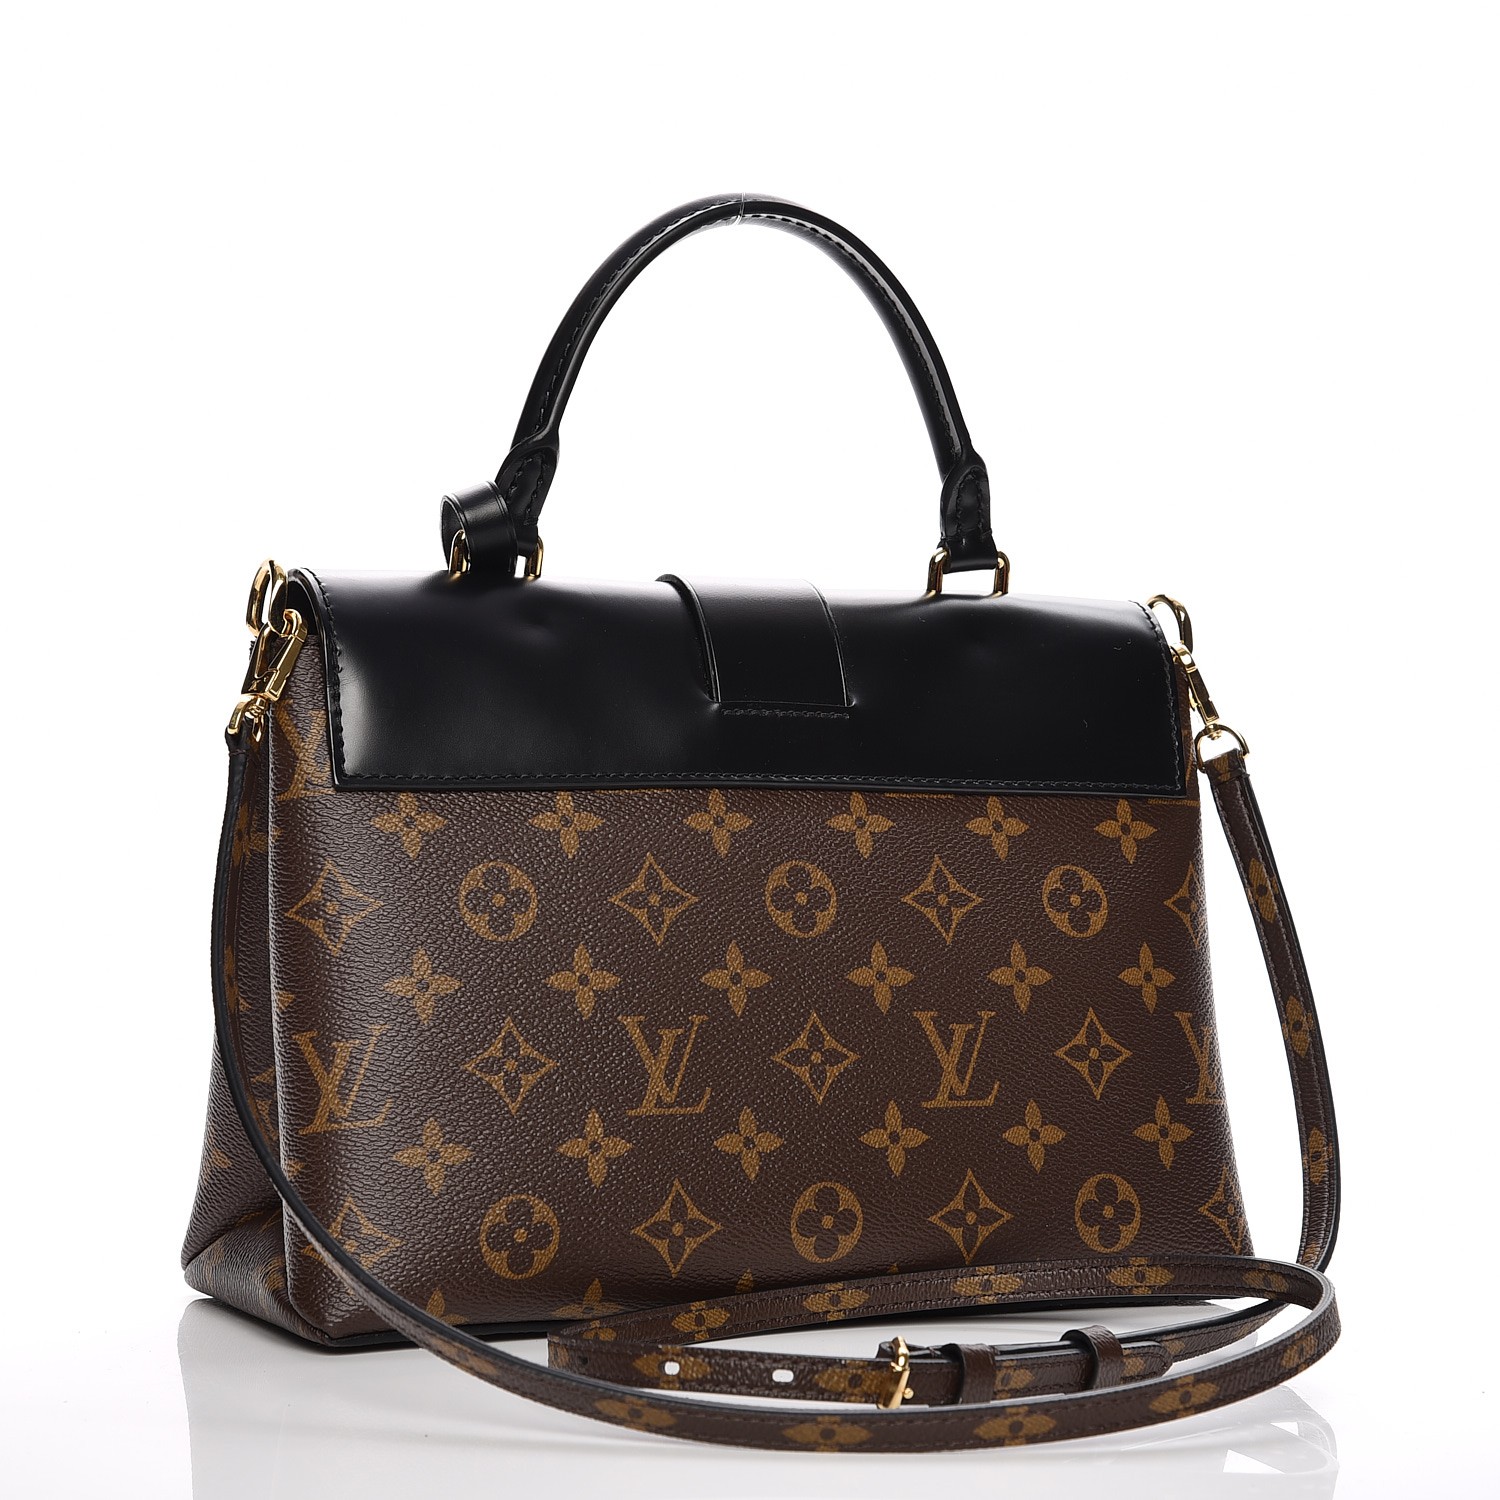 Louis Vuitton Bags In Neiman Marcus